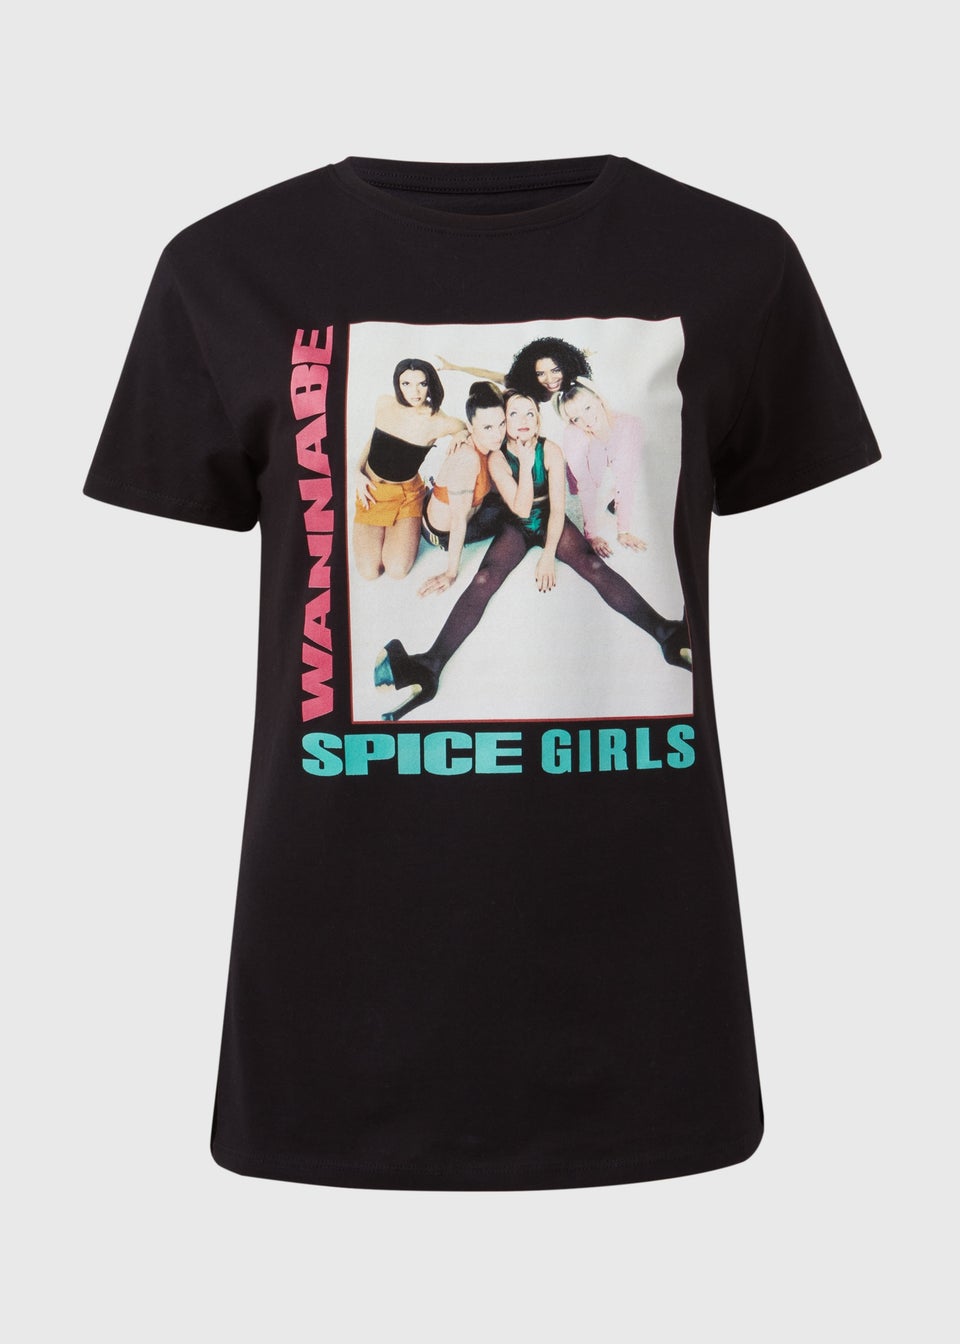 Spice Girls Black T-Shirt - Matalan